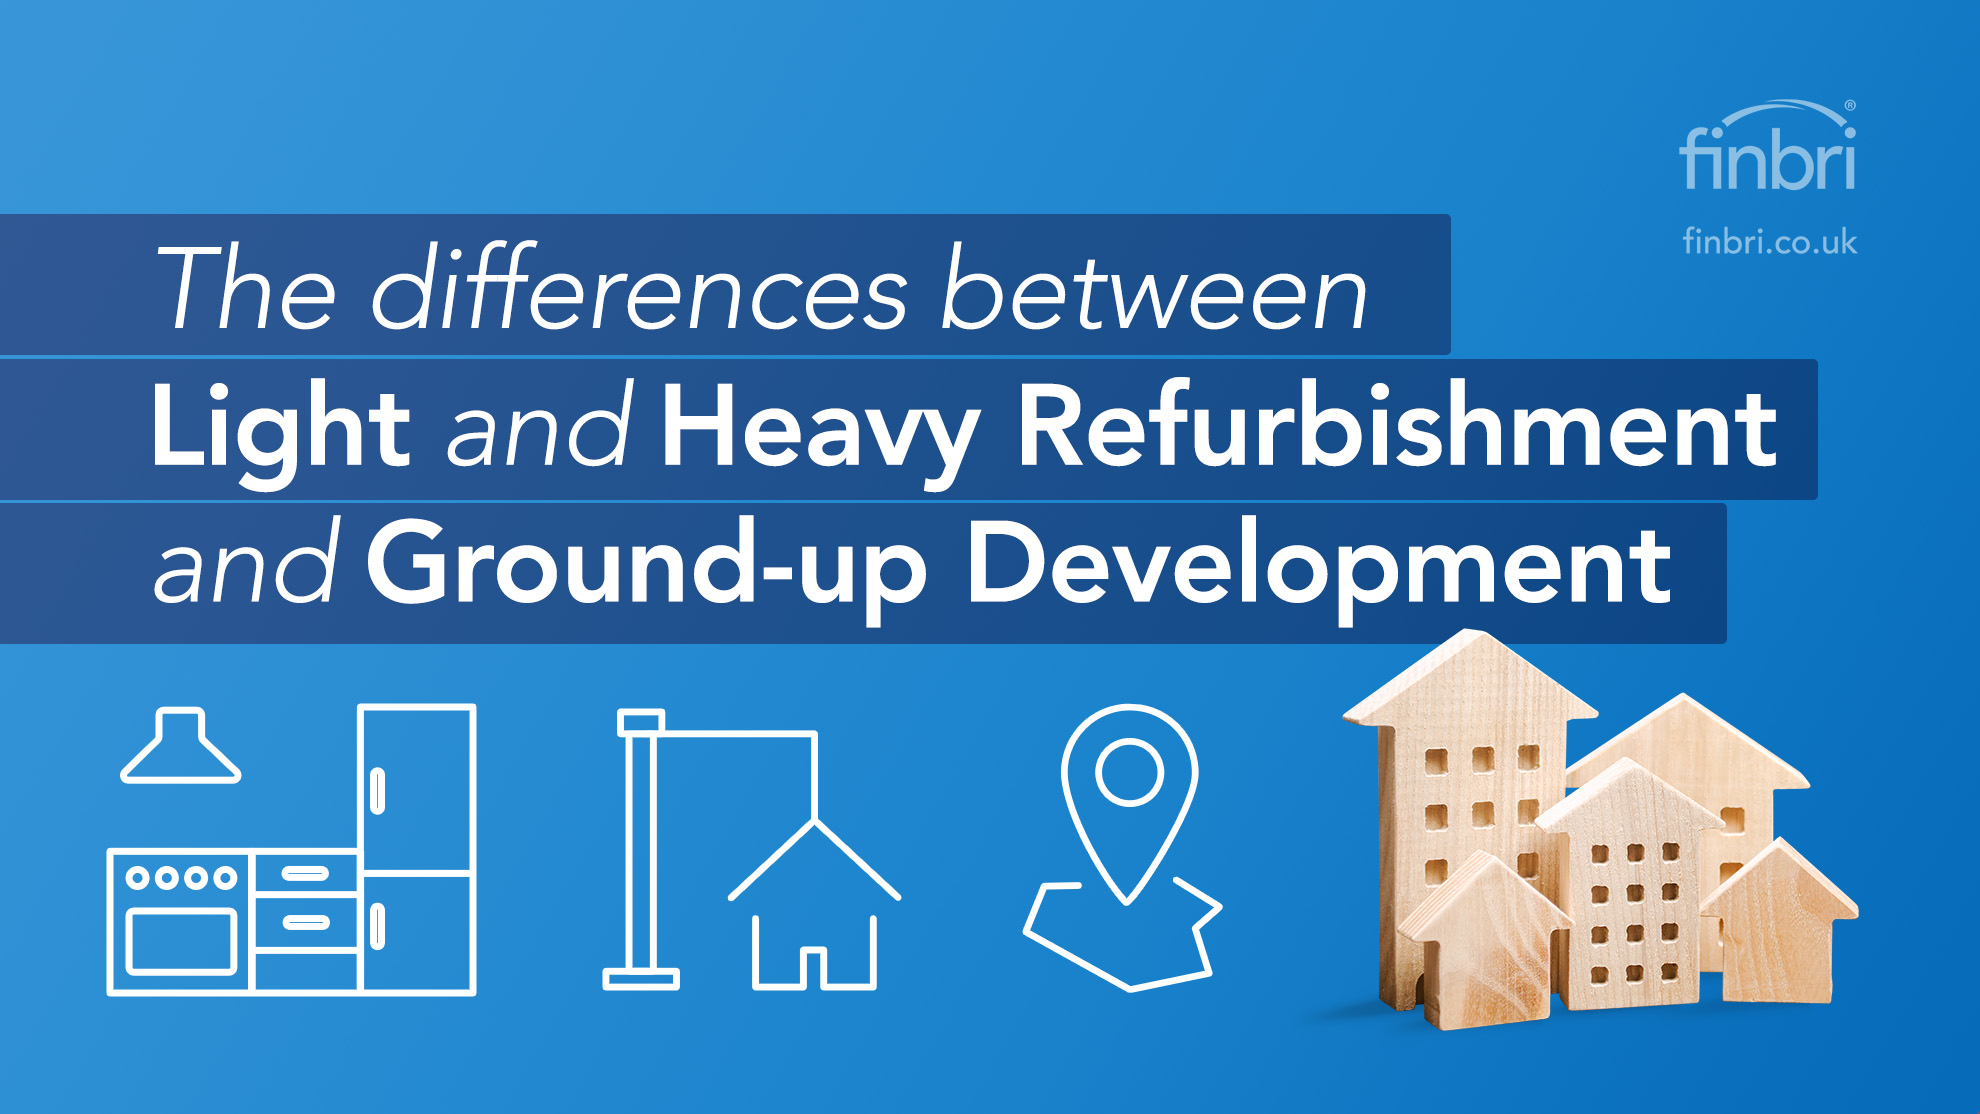 The differences between Light Refurbishment, Heavy Refurbishment and Ground-up Development